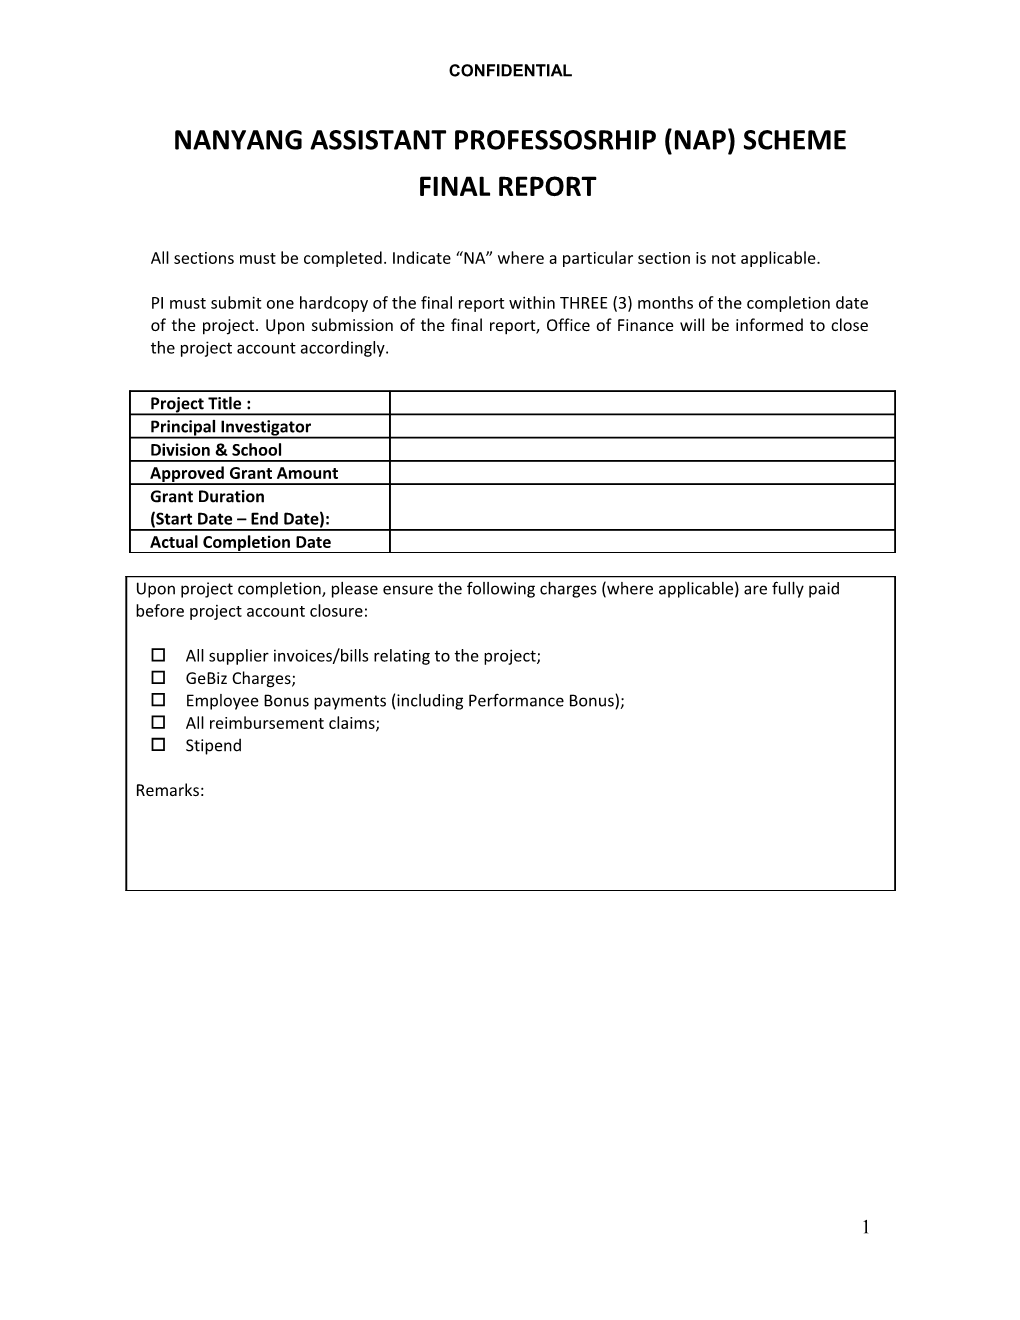 Annual / Final* Crp Progress Report to Nrf